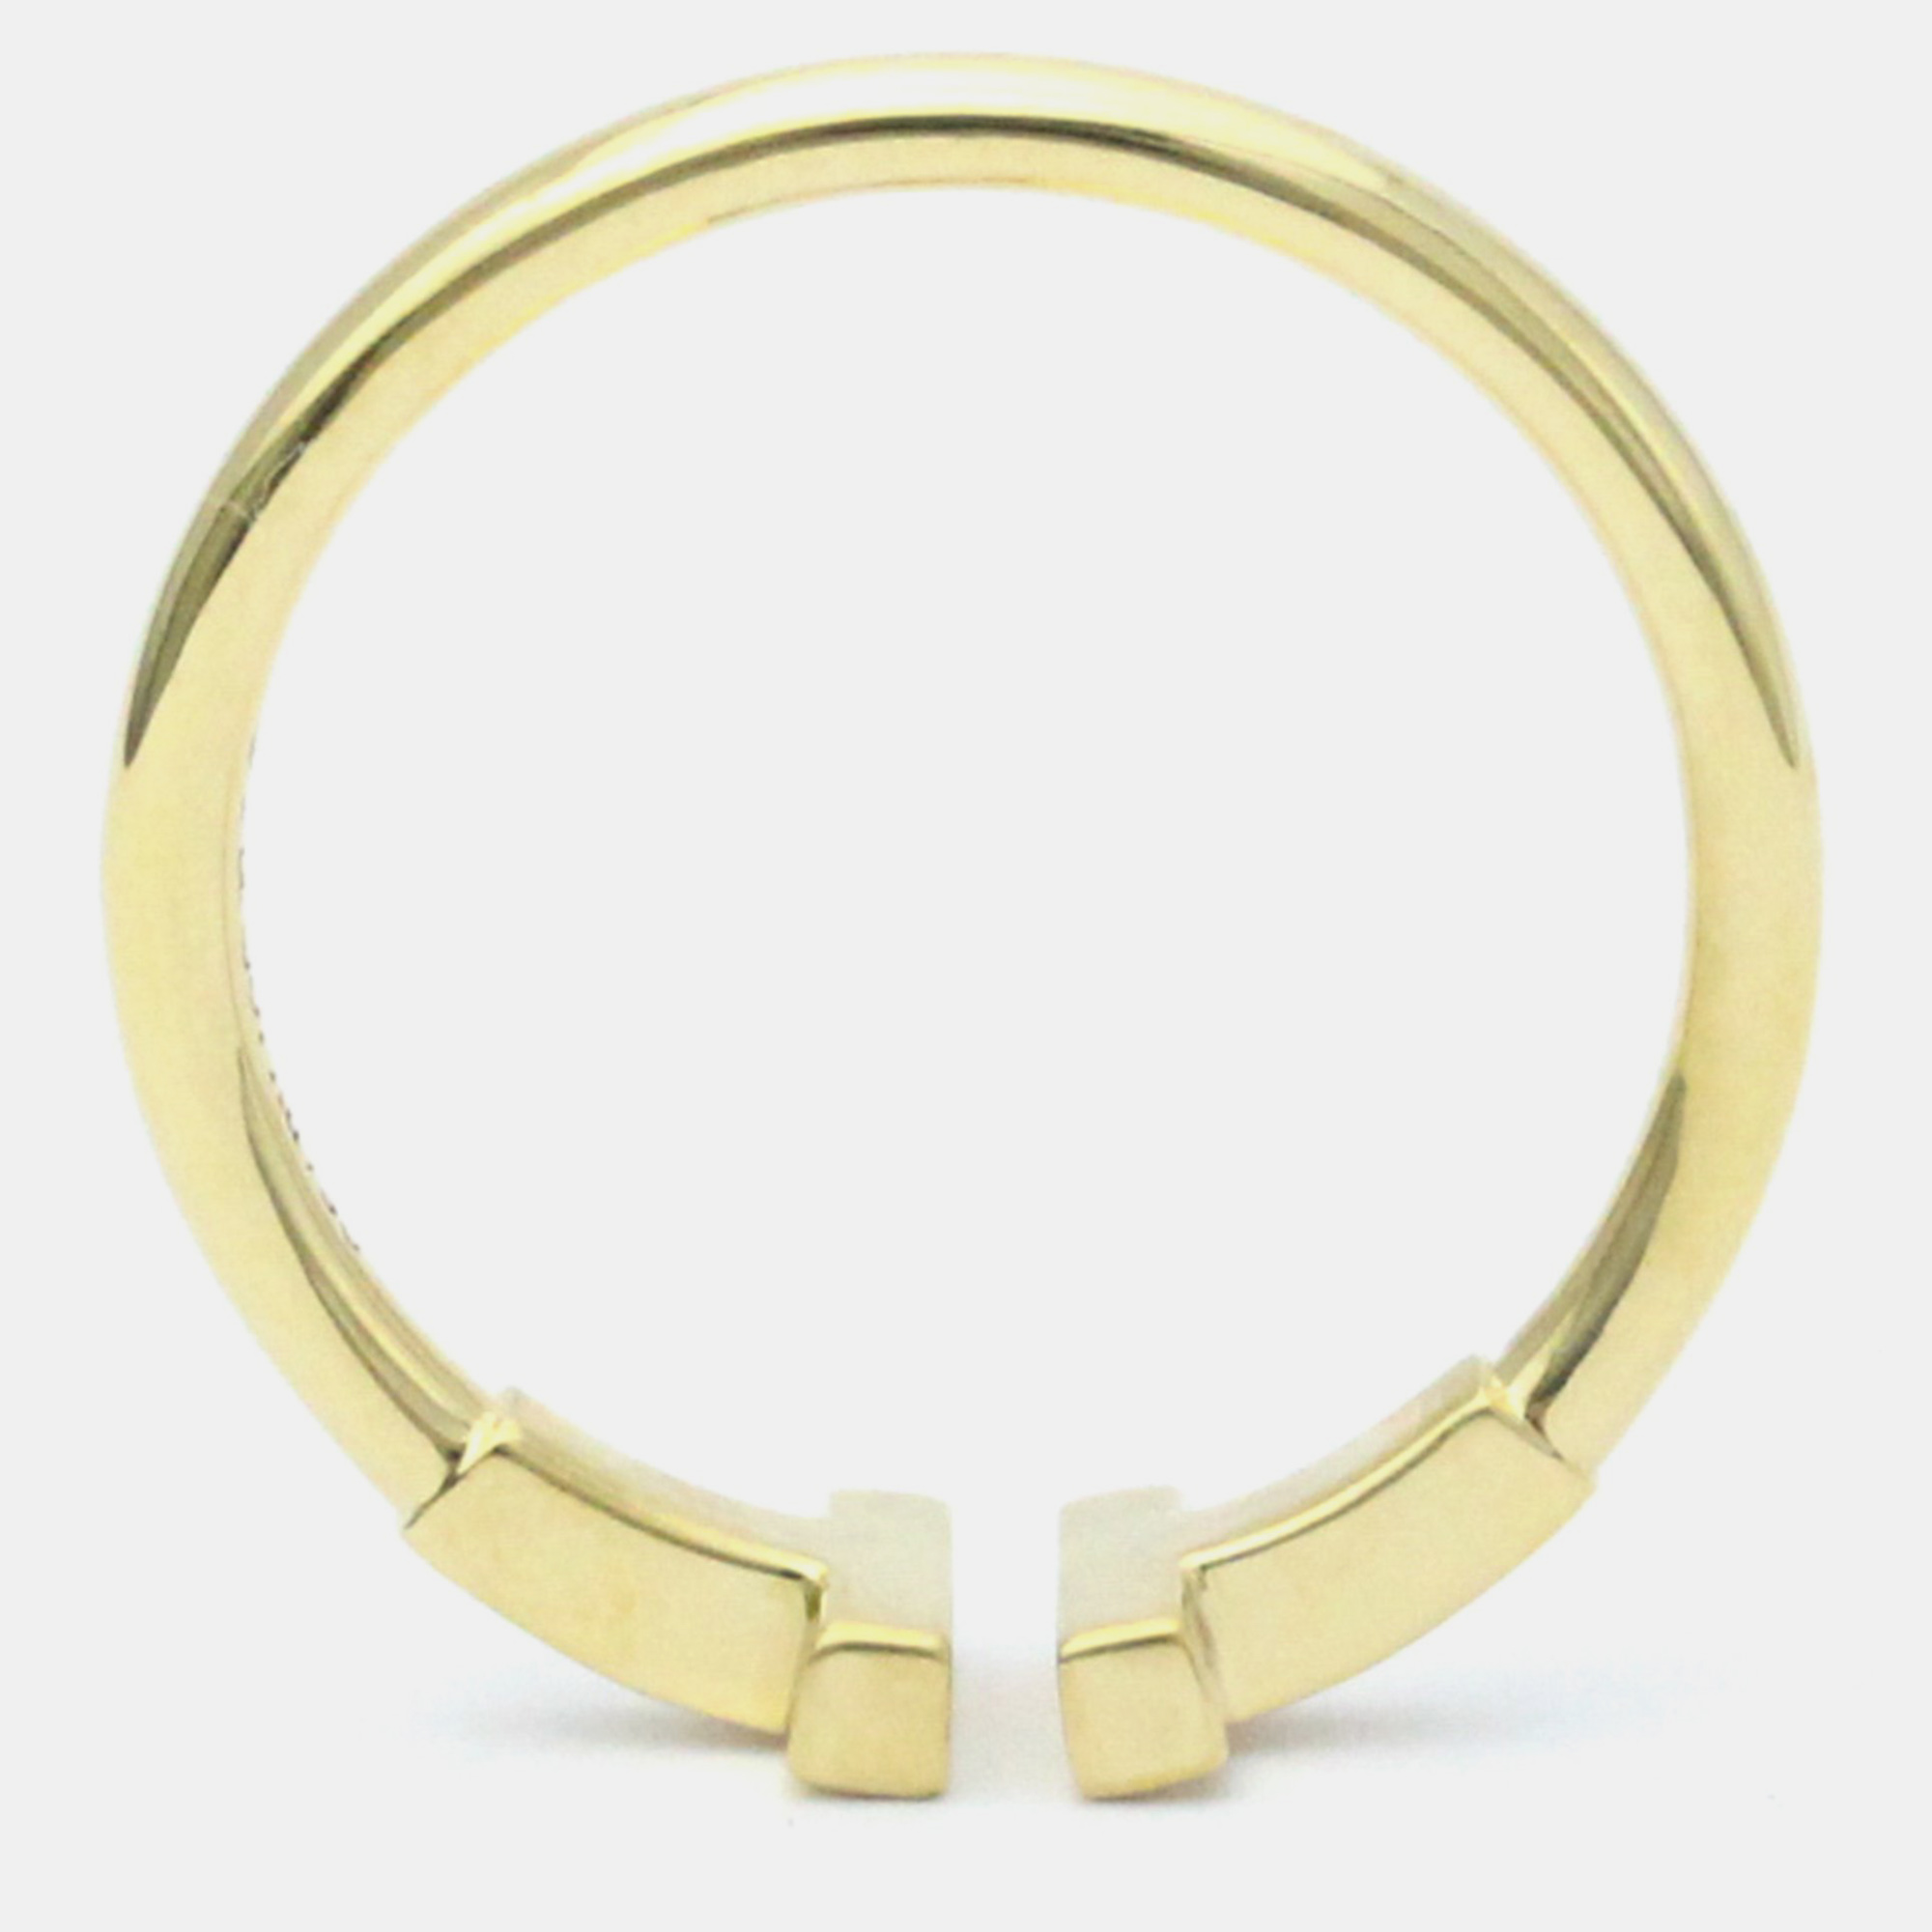 Tiffany & Co. Twire 18K Yellow Gold Ring EU 57